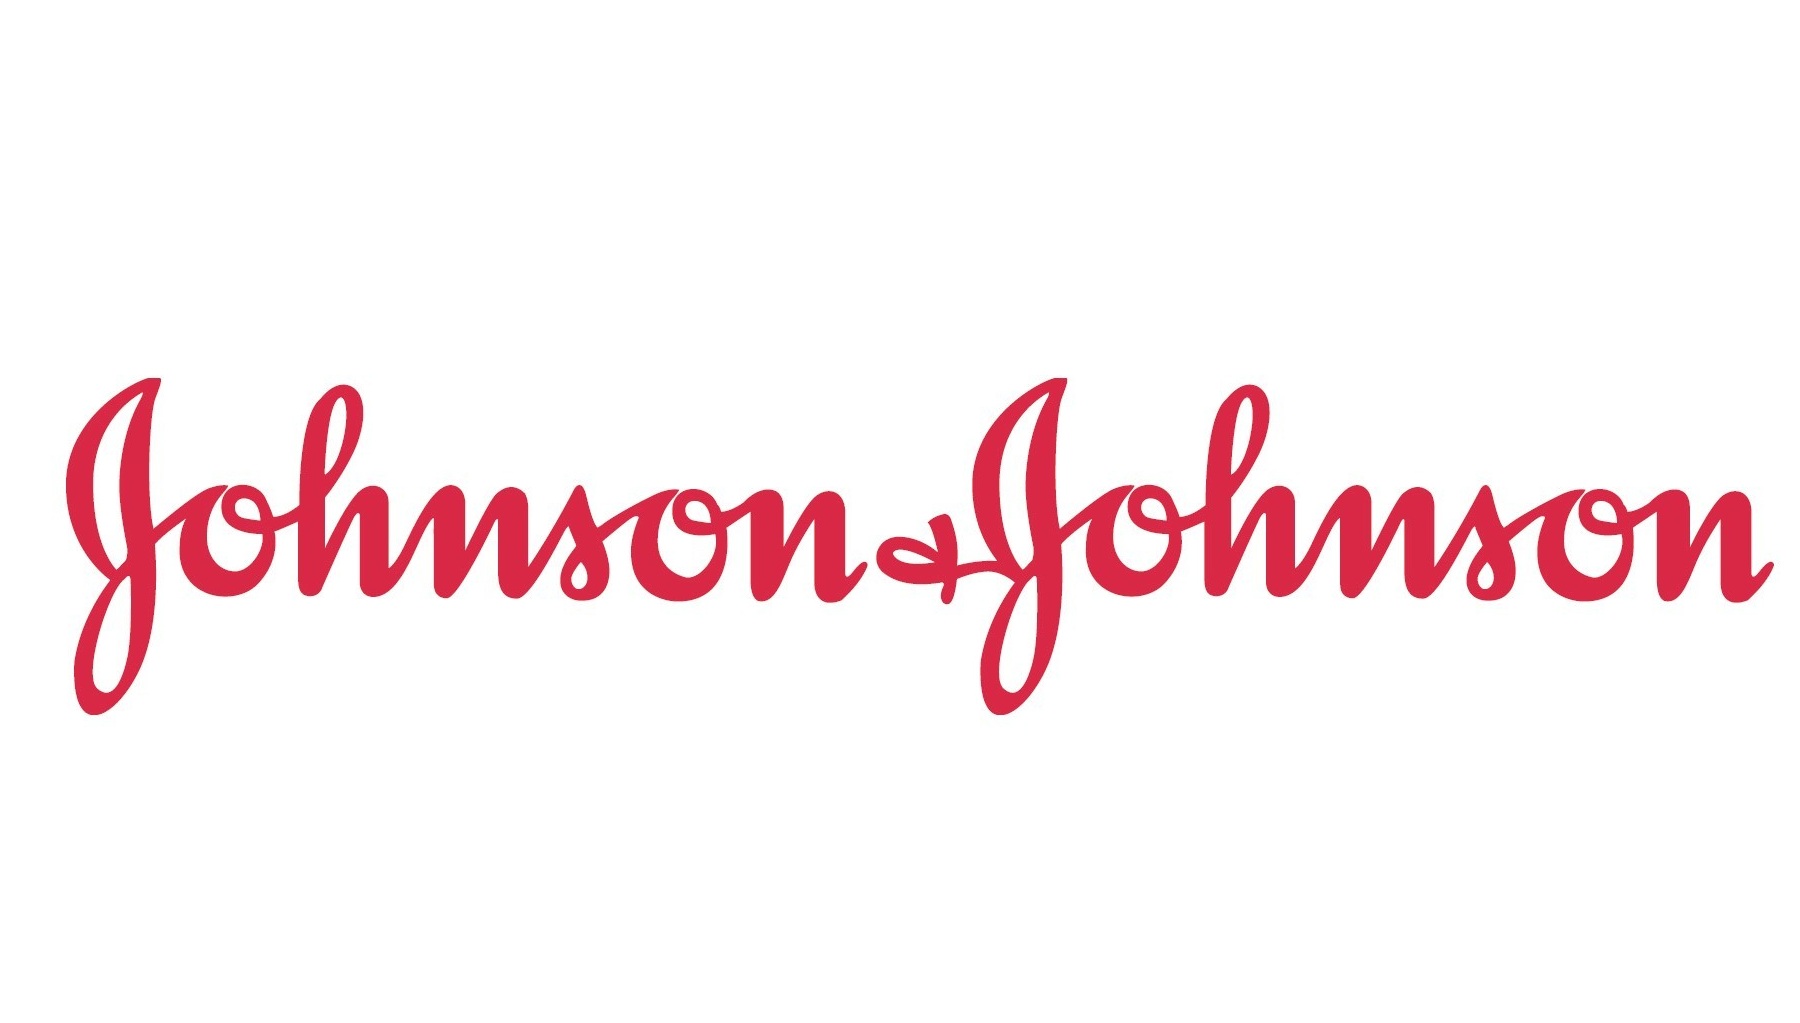 Kentucky Attorney General sues Johnson & Johnson over mesh marketing